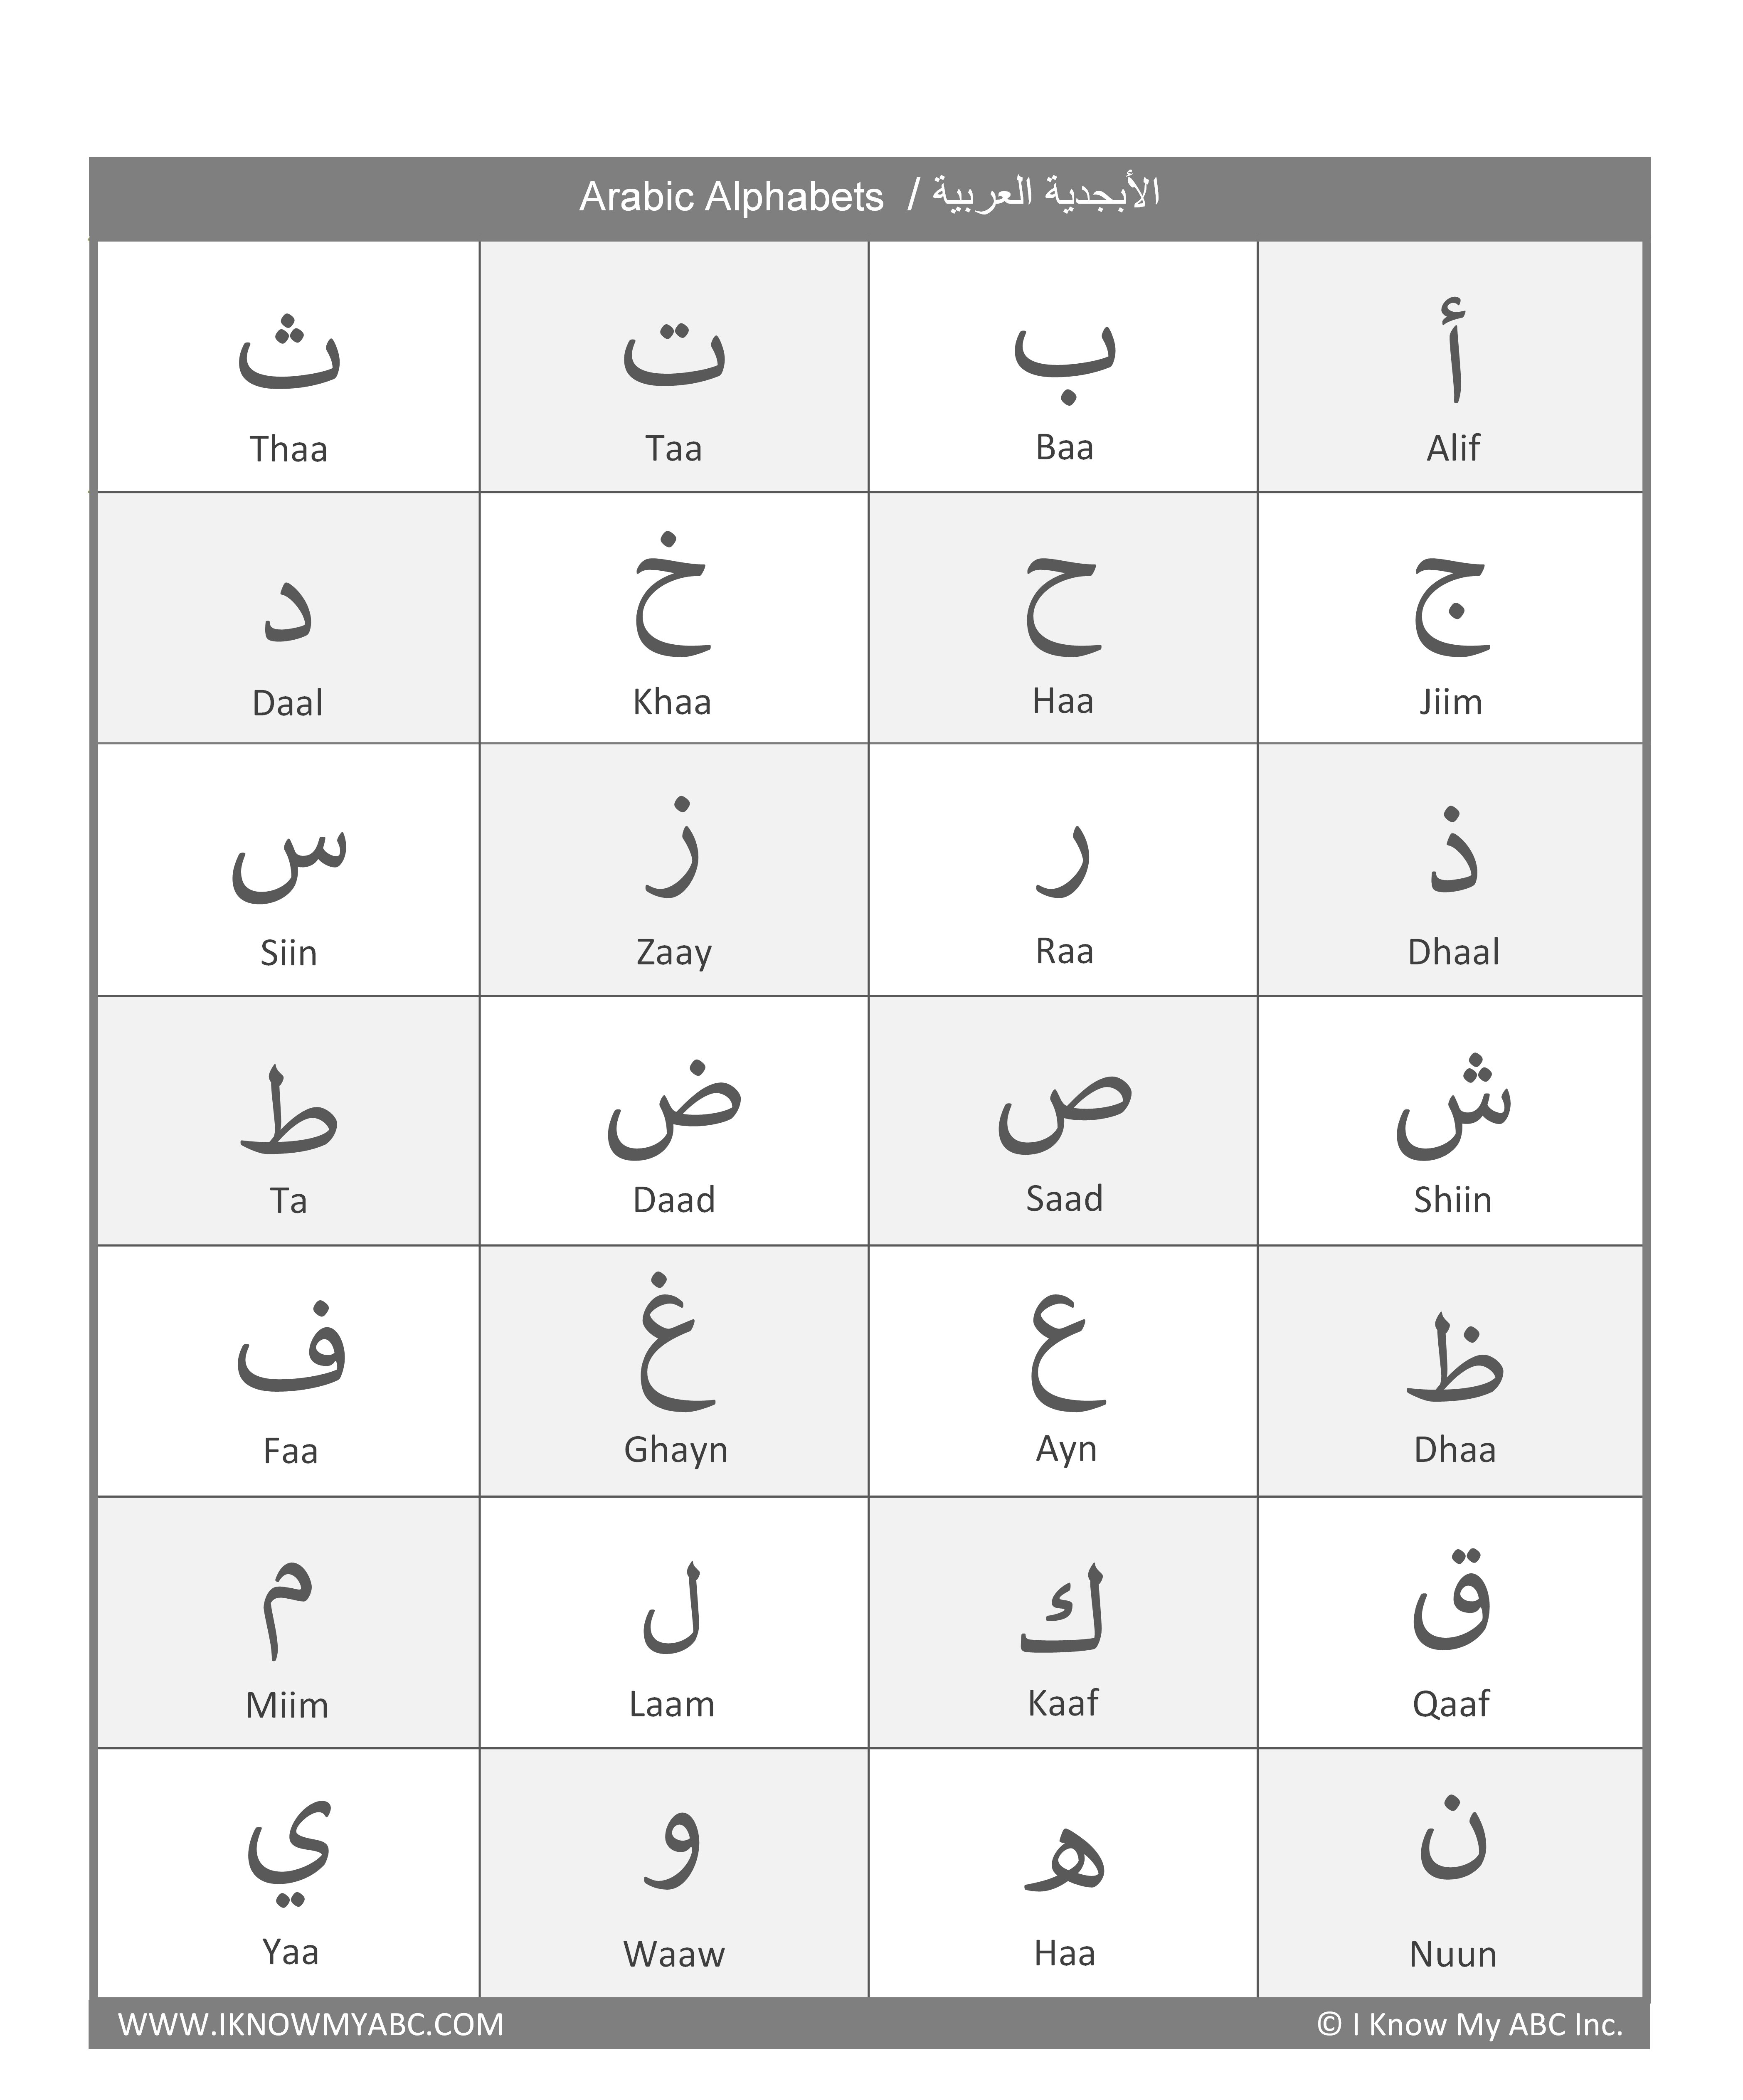 learn-arabic-alphabet-free-educational-resources-i-know-my-abc-inc